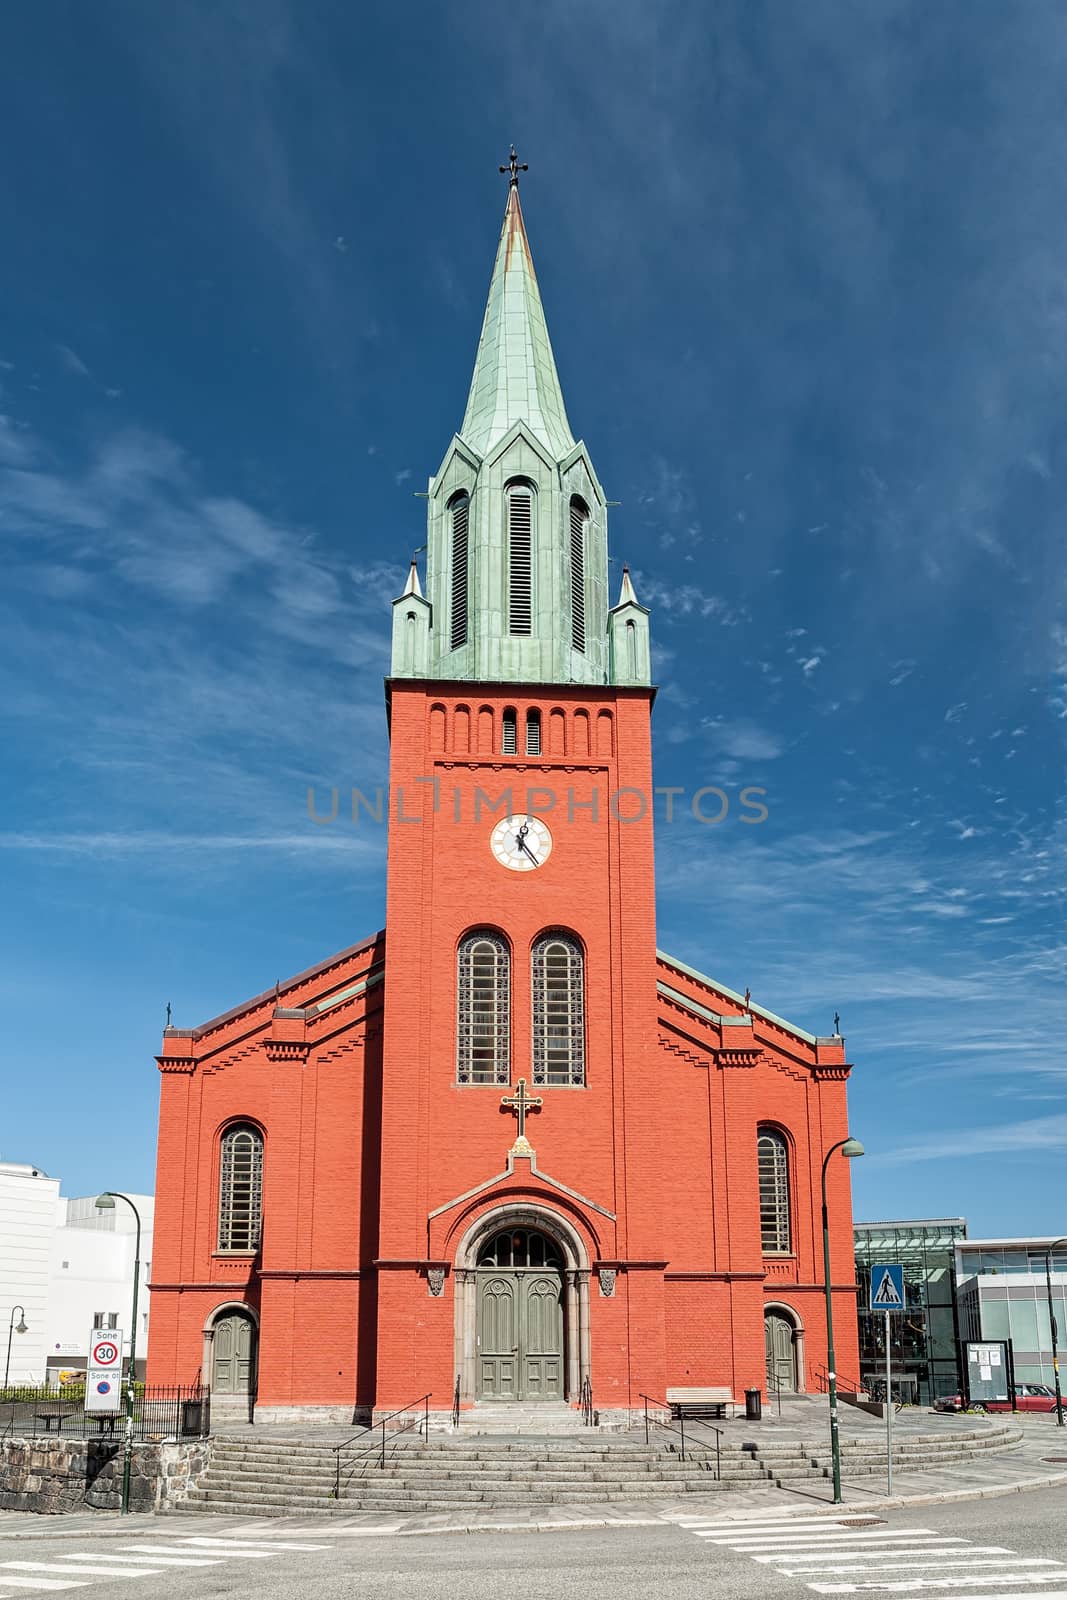 Saint Petri church in Stavanger against a blue sky, Norway